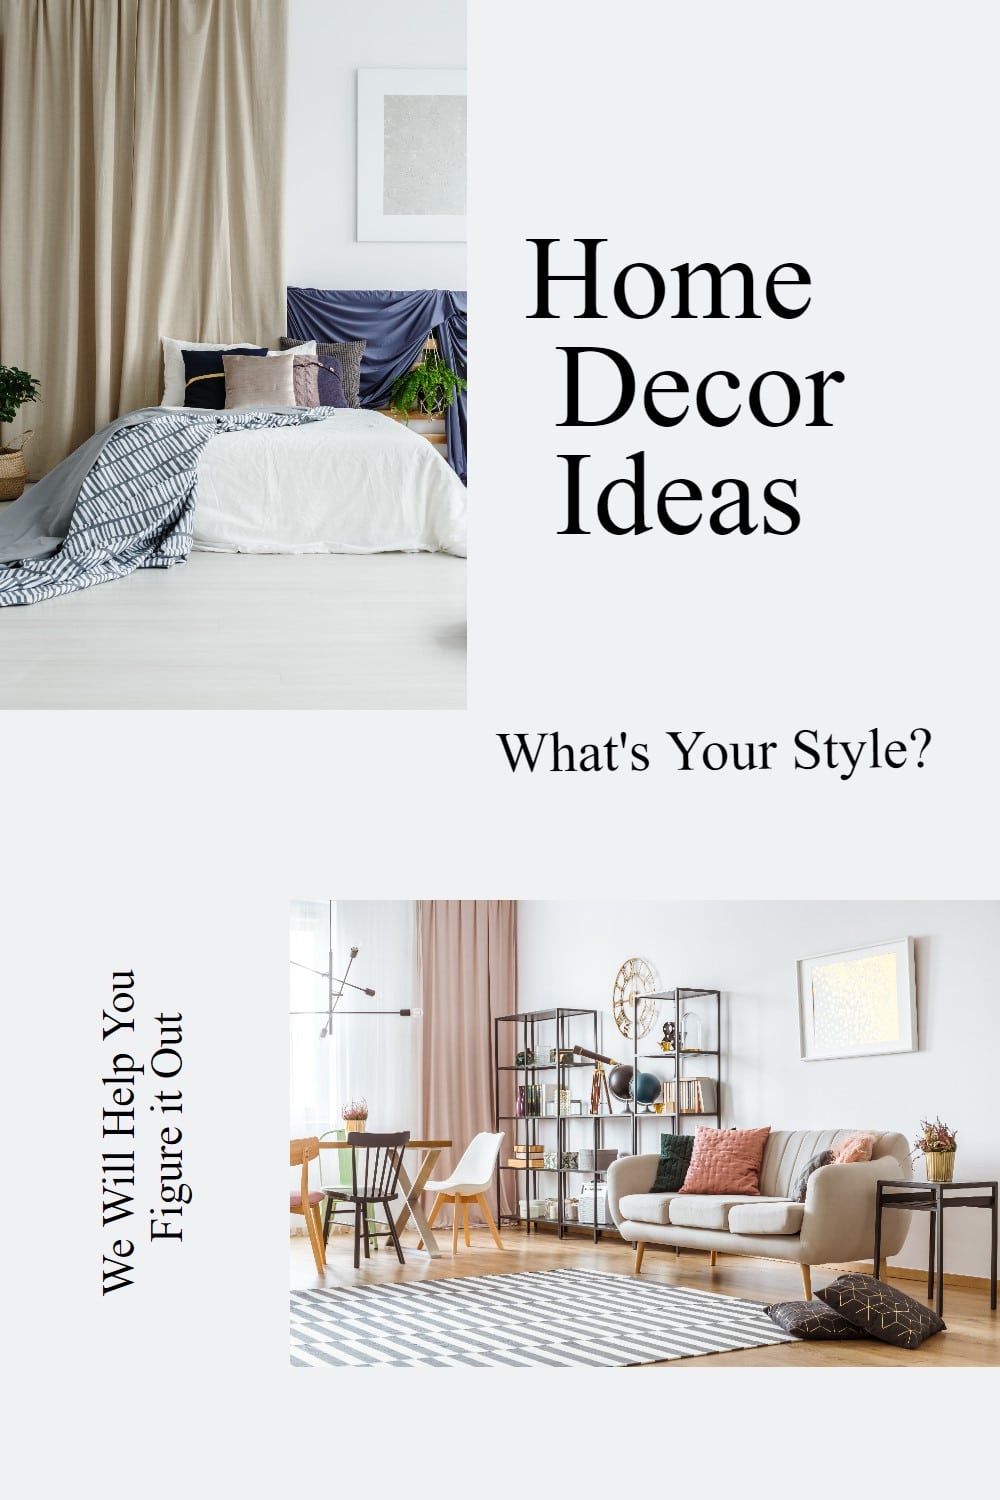 Home Decor Ideas - My Repurposed Life®